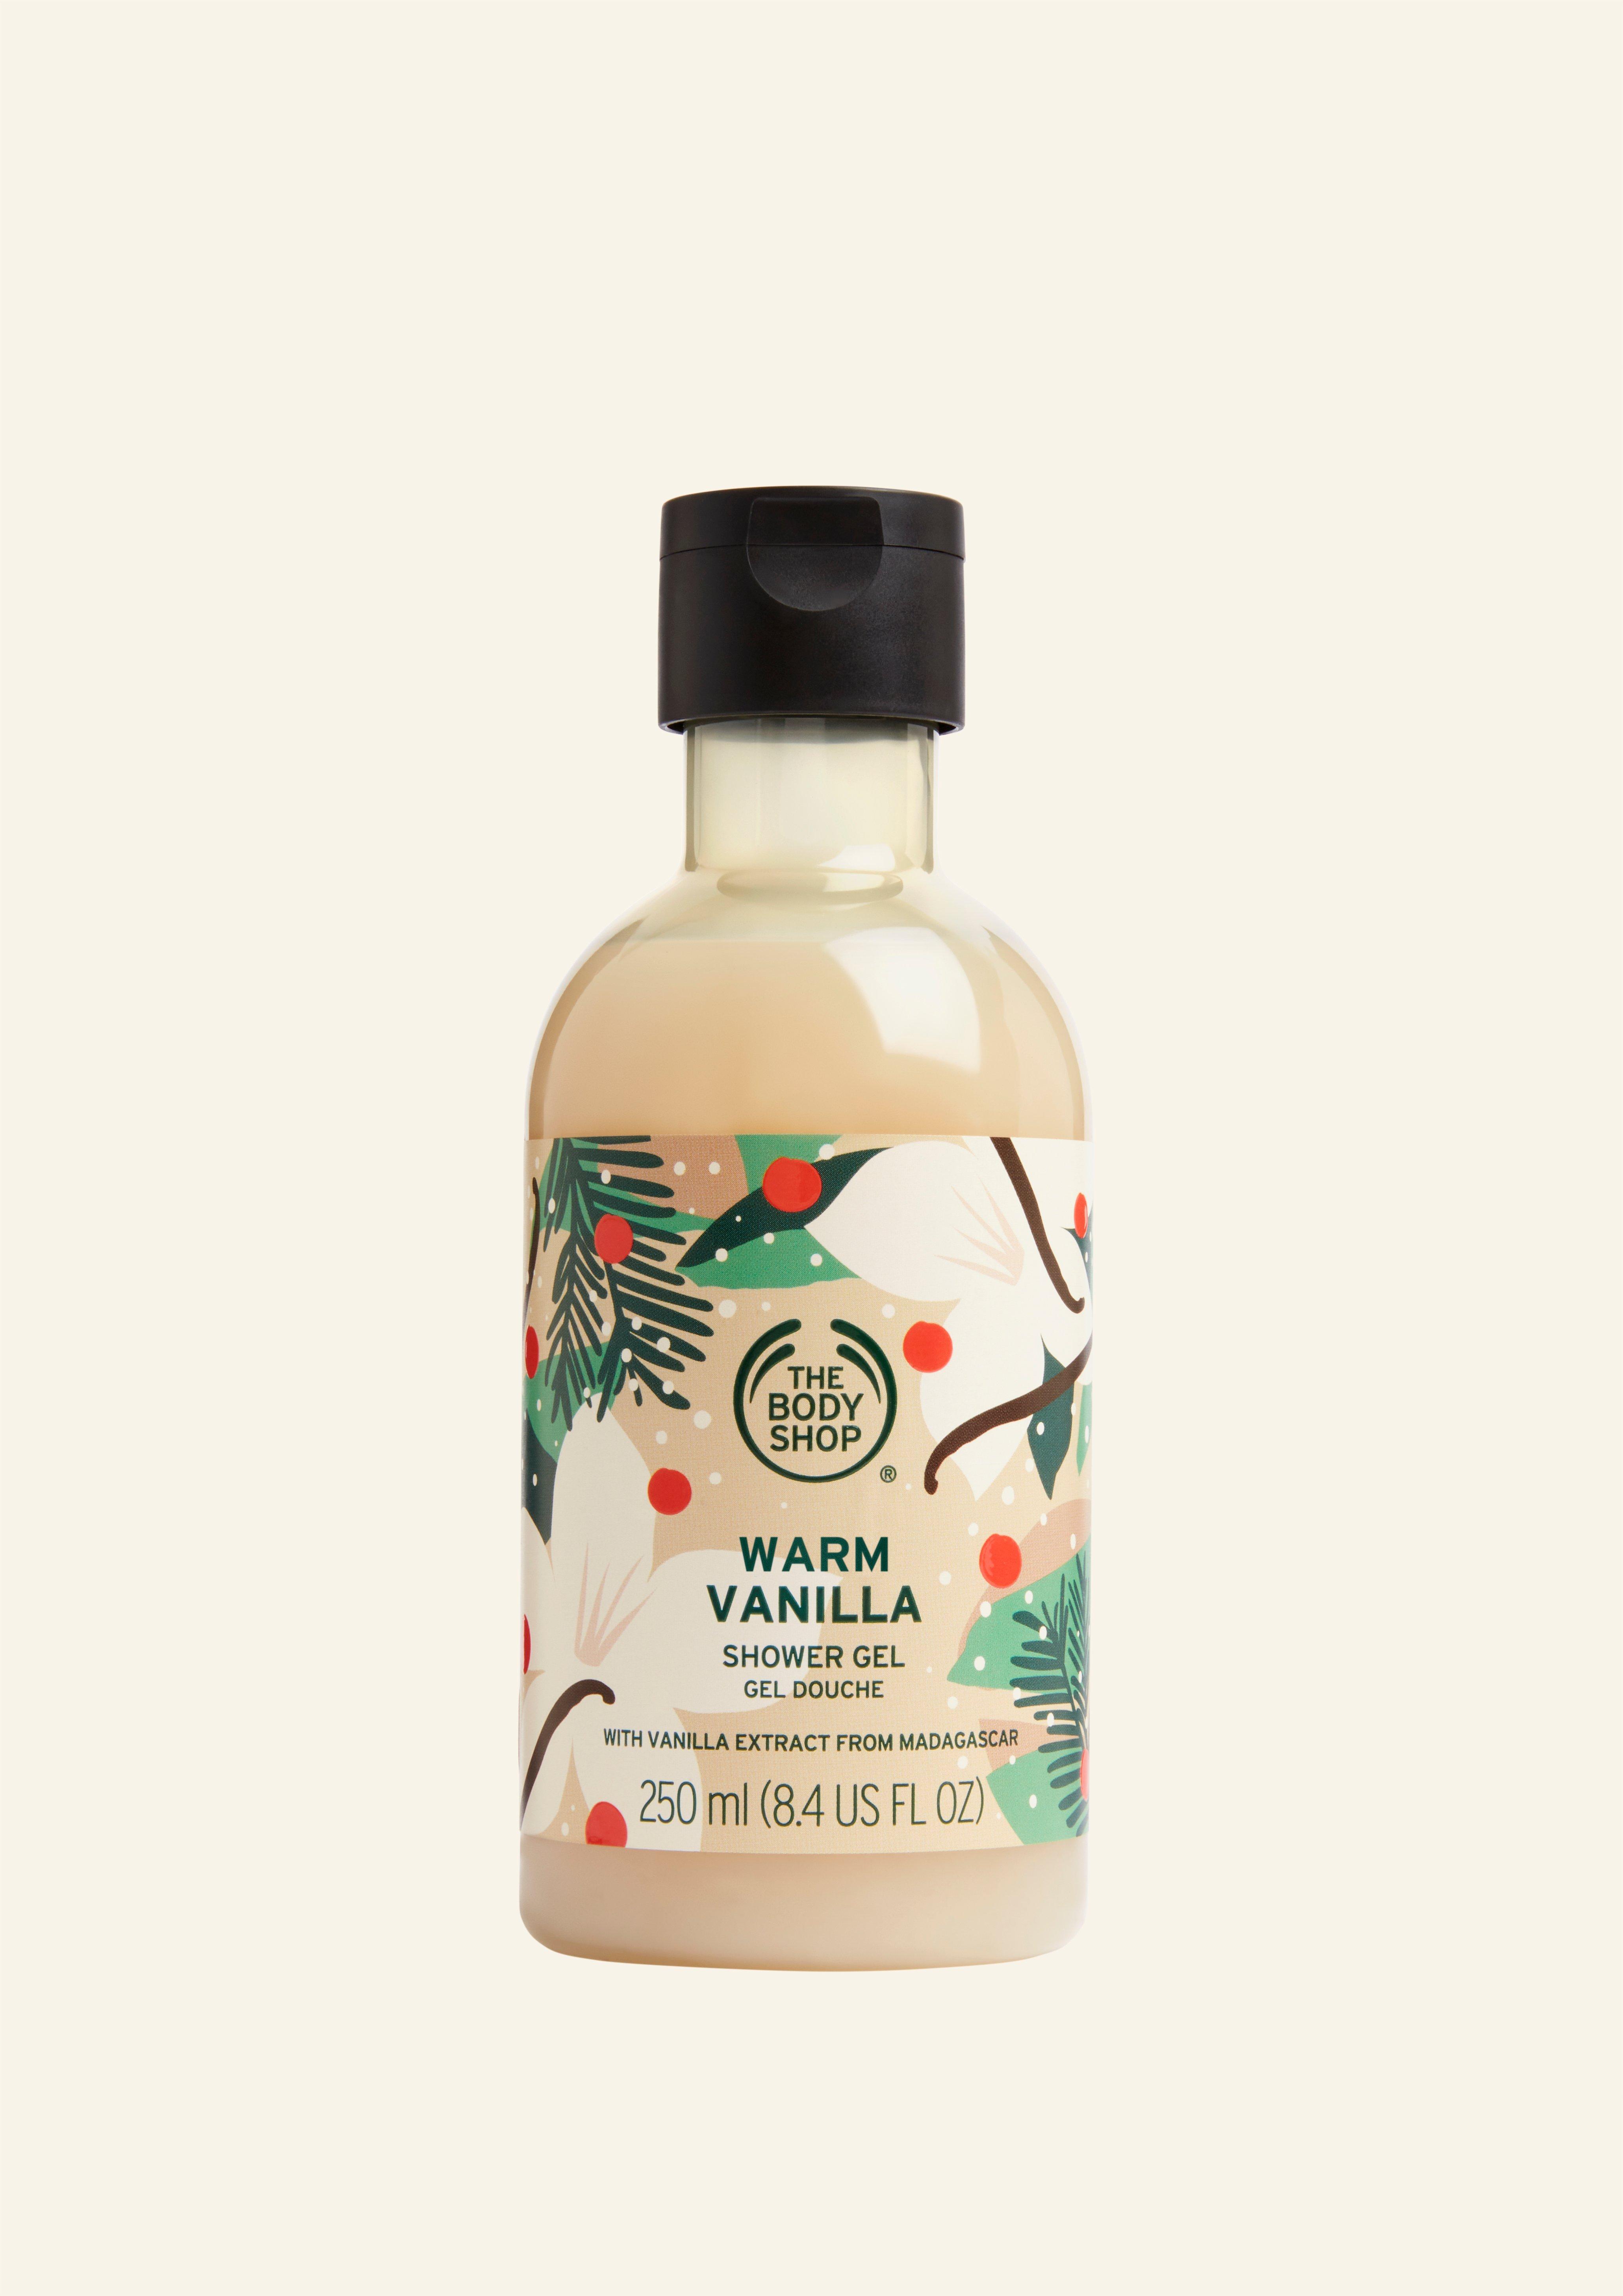 Limited Edition Warm Vanilla Shower Gel The Body Shop®